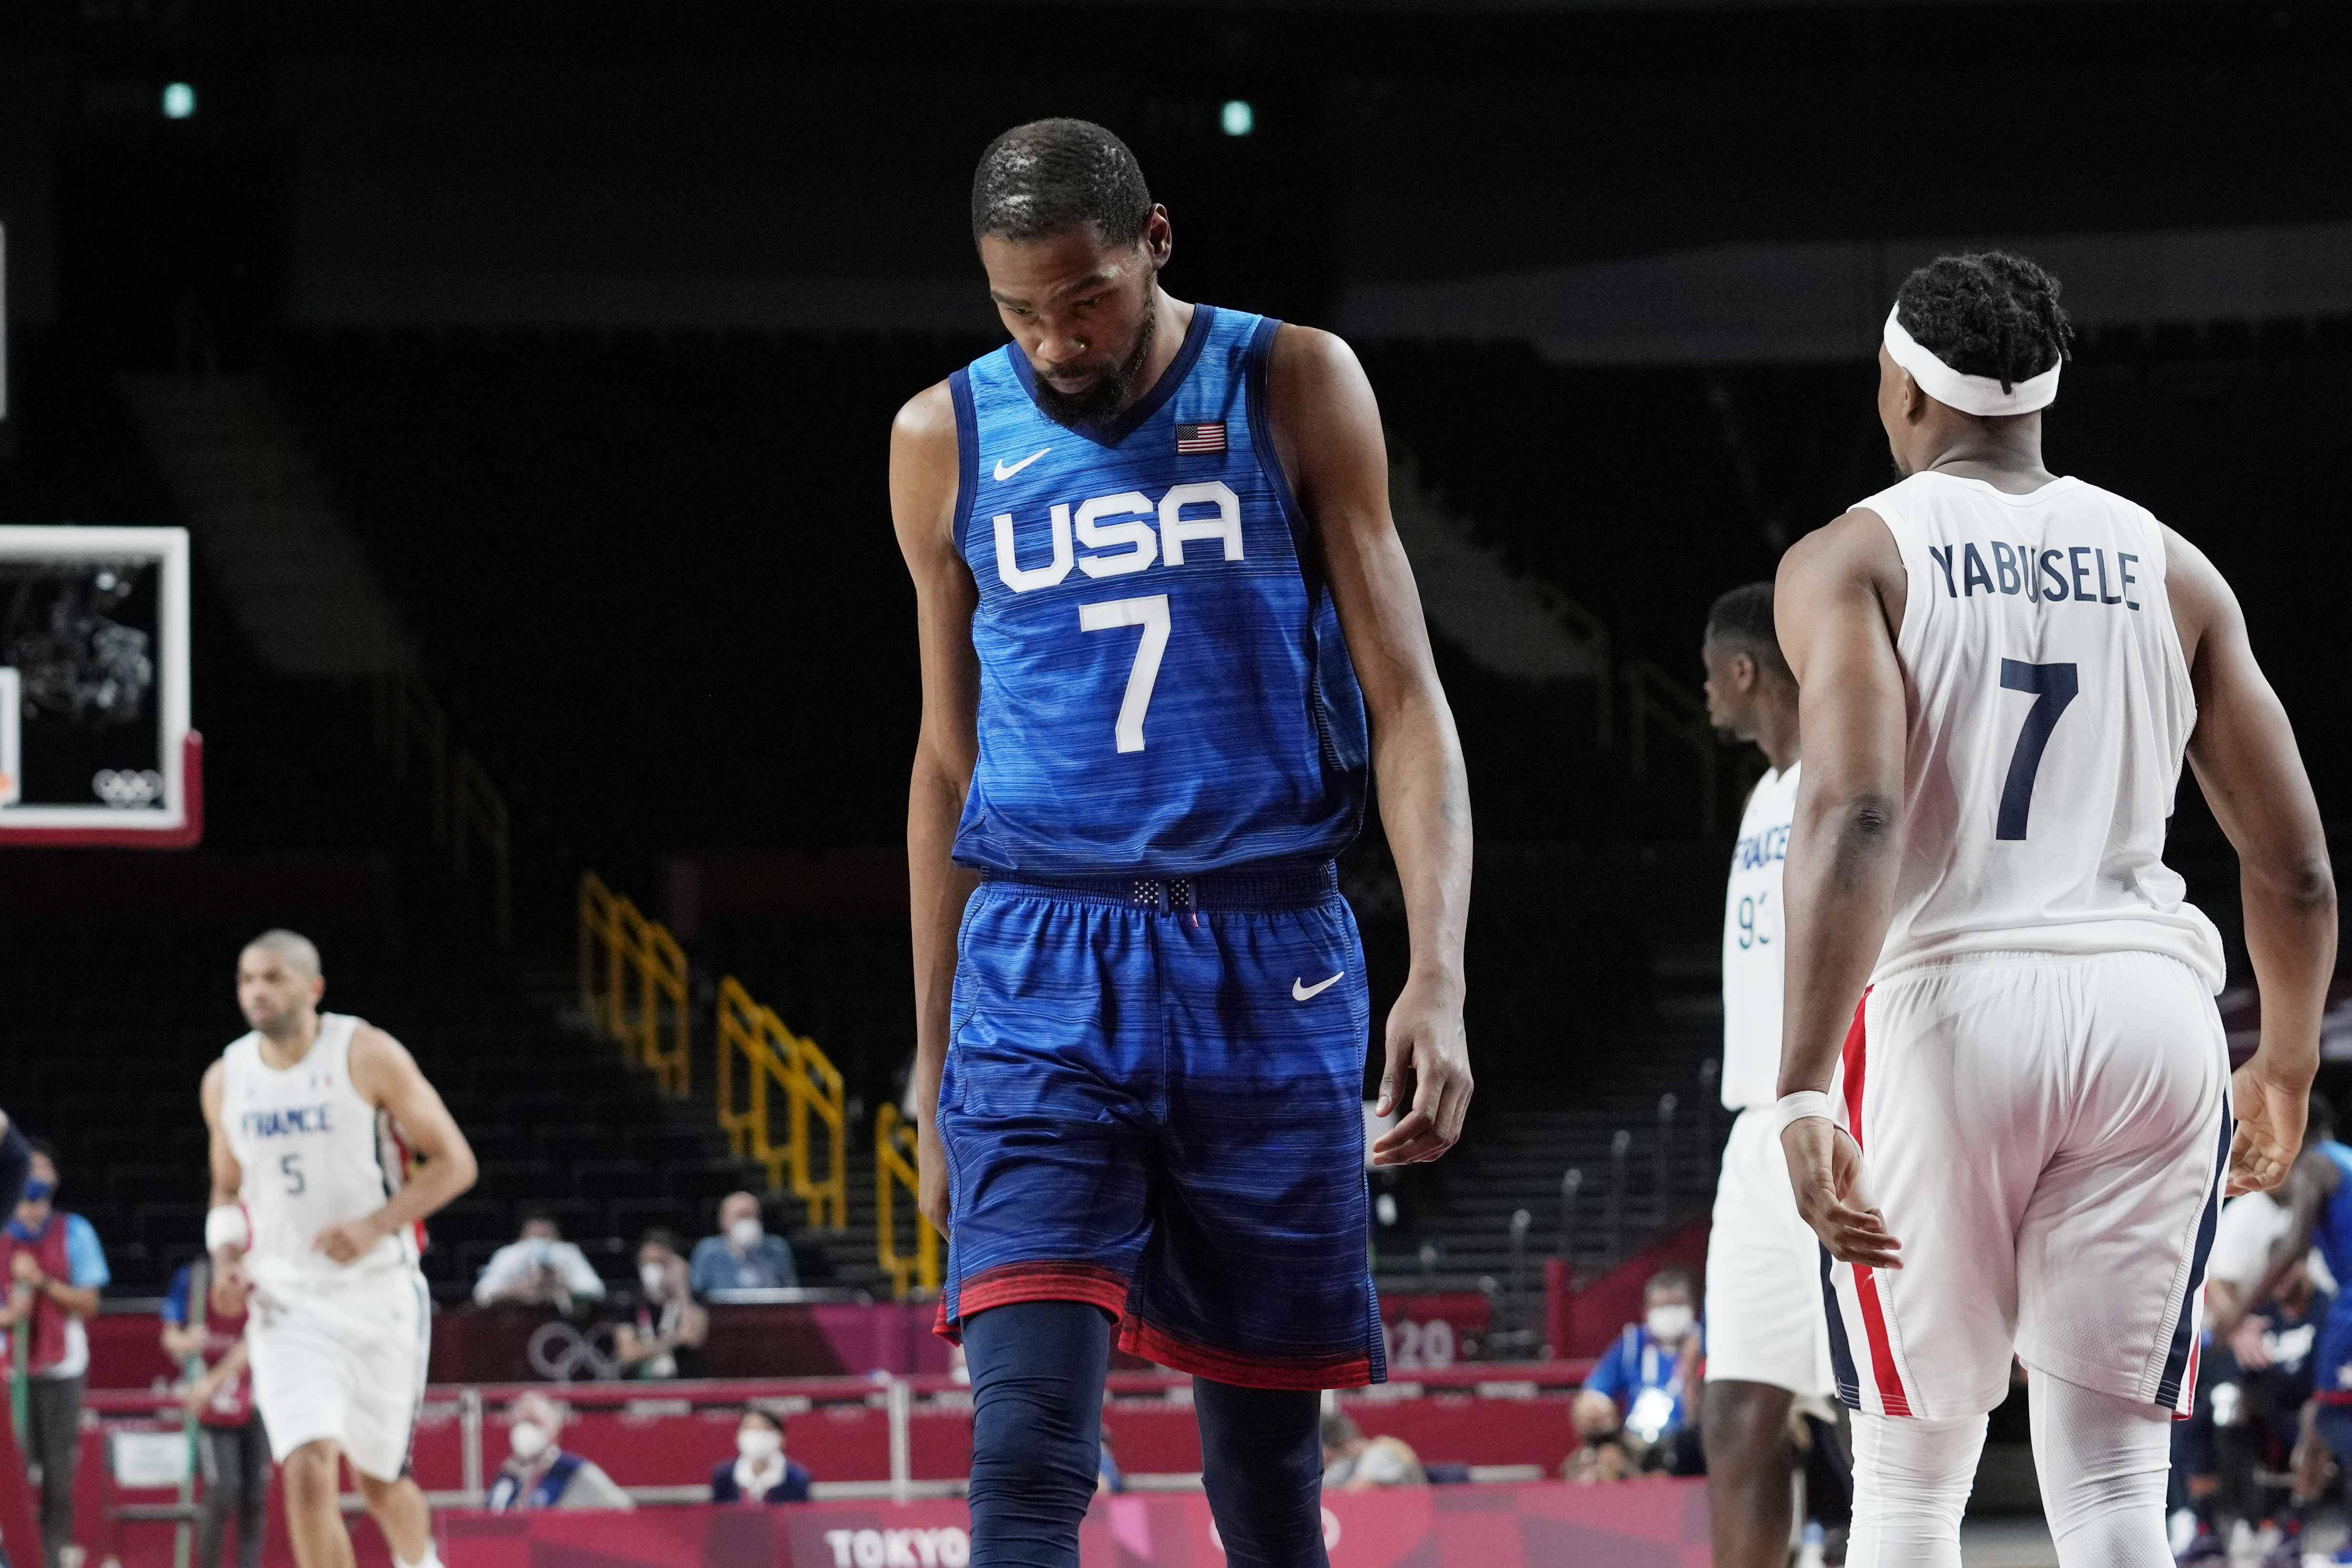 Us Men S Basketball Team Loses To France Ending 25 Game Olympic Win Streak The Boston Globe